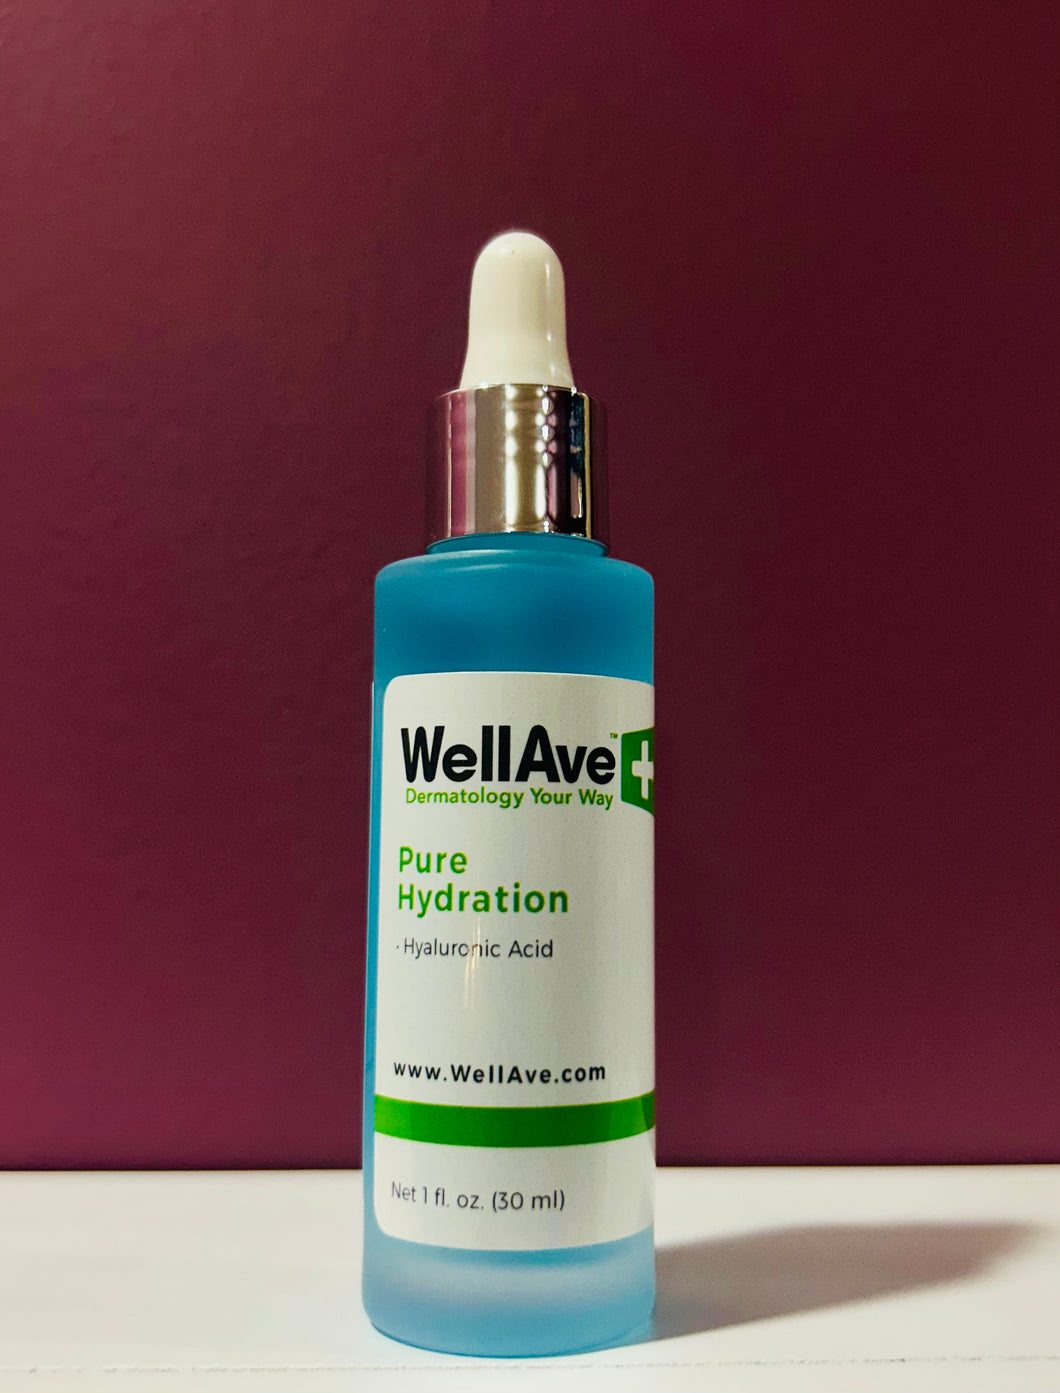 WellAve's Pure Hydration Serum